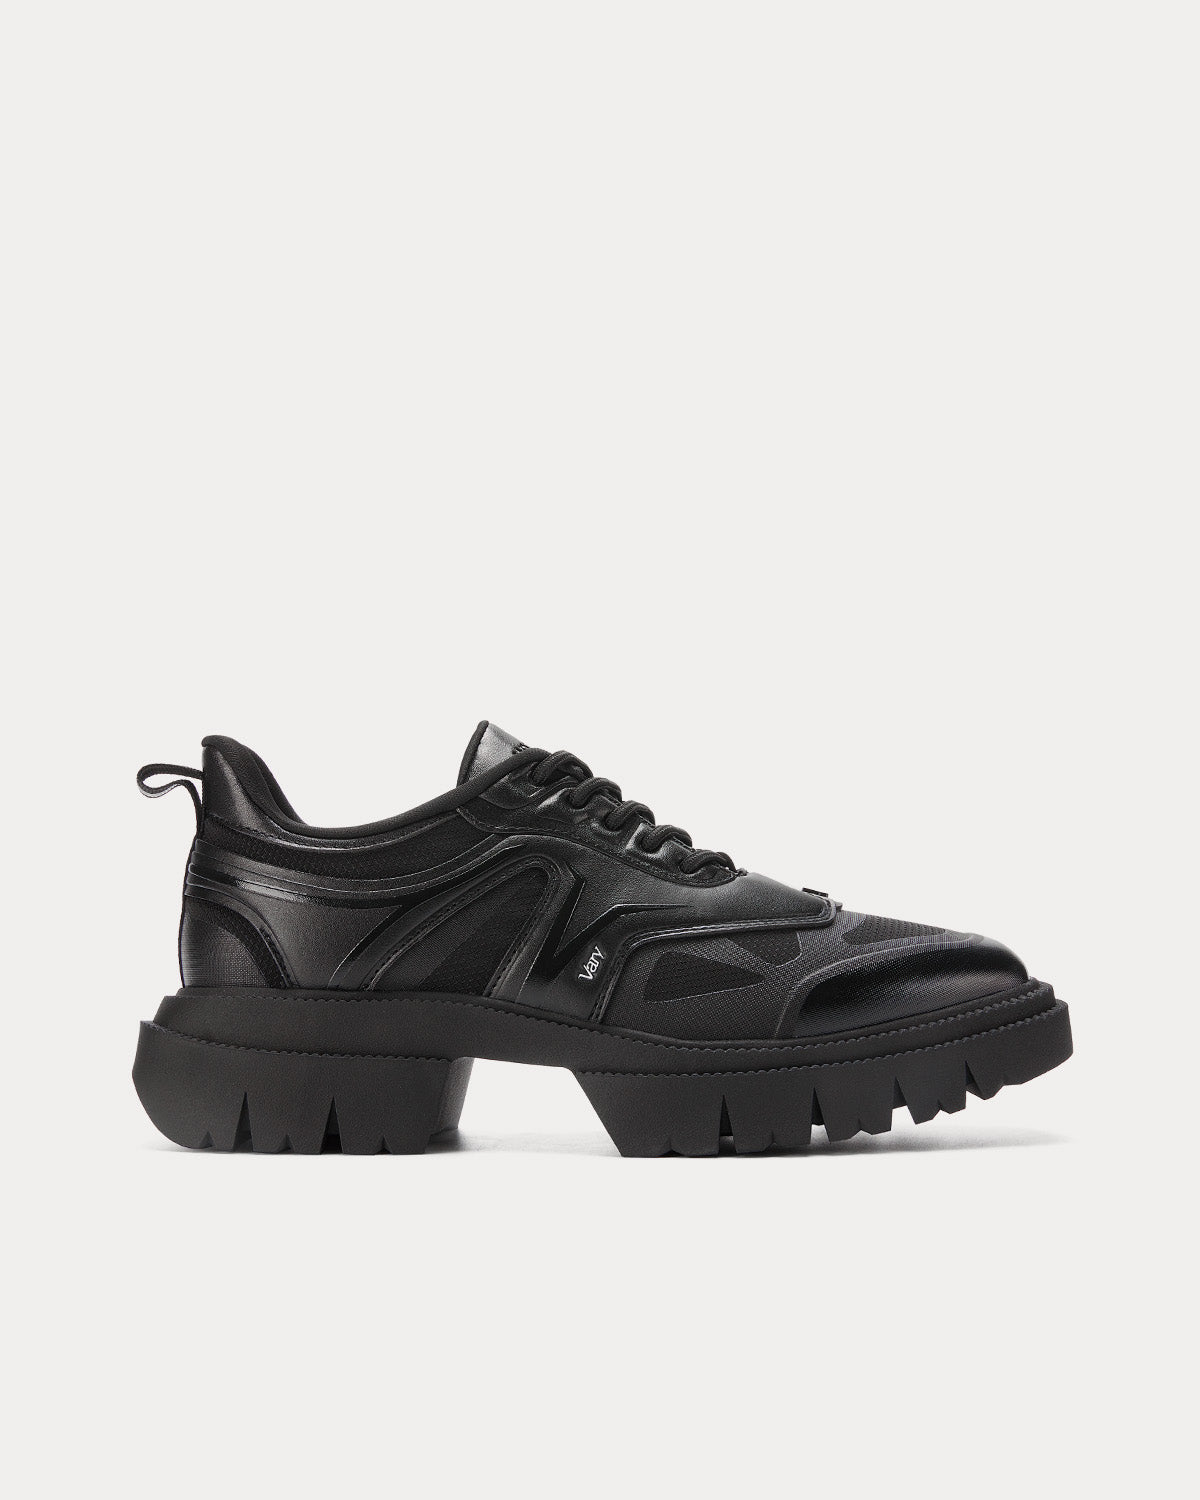 Untitlab - untitled#12 Vary Black Low Top Sneakers